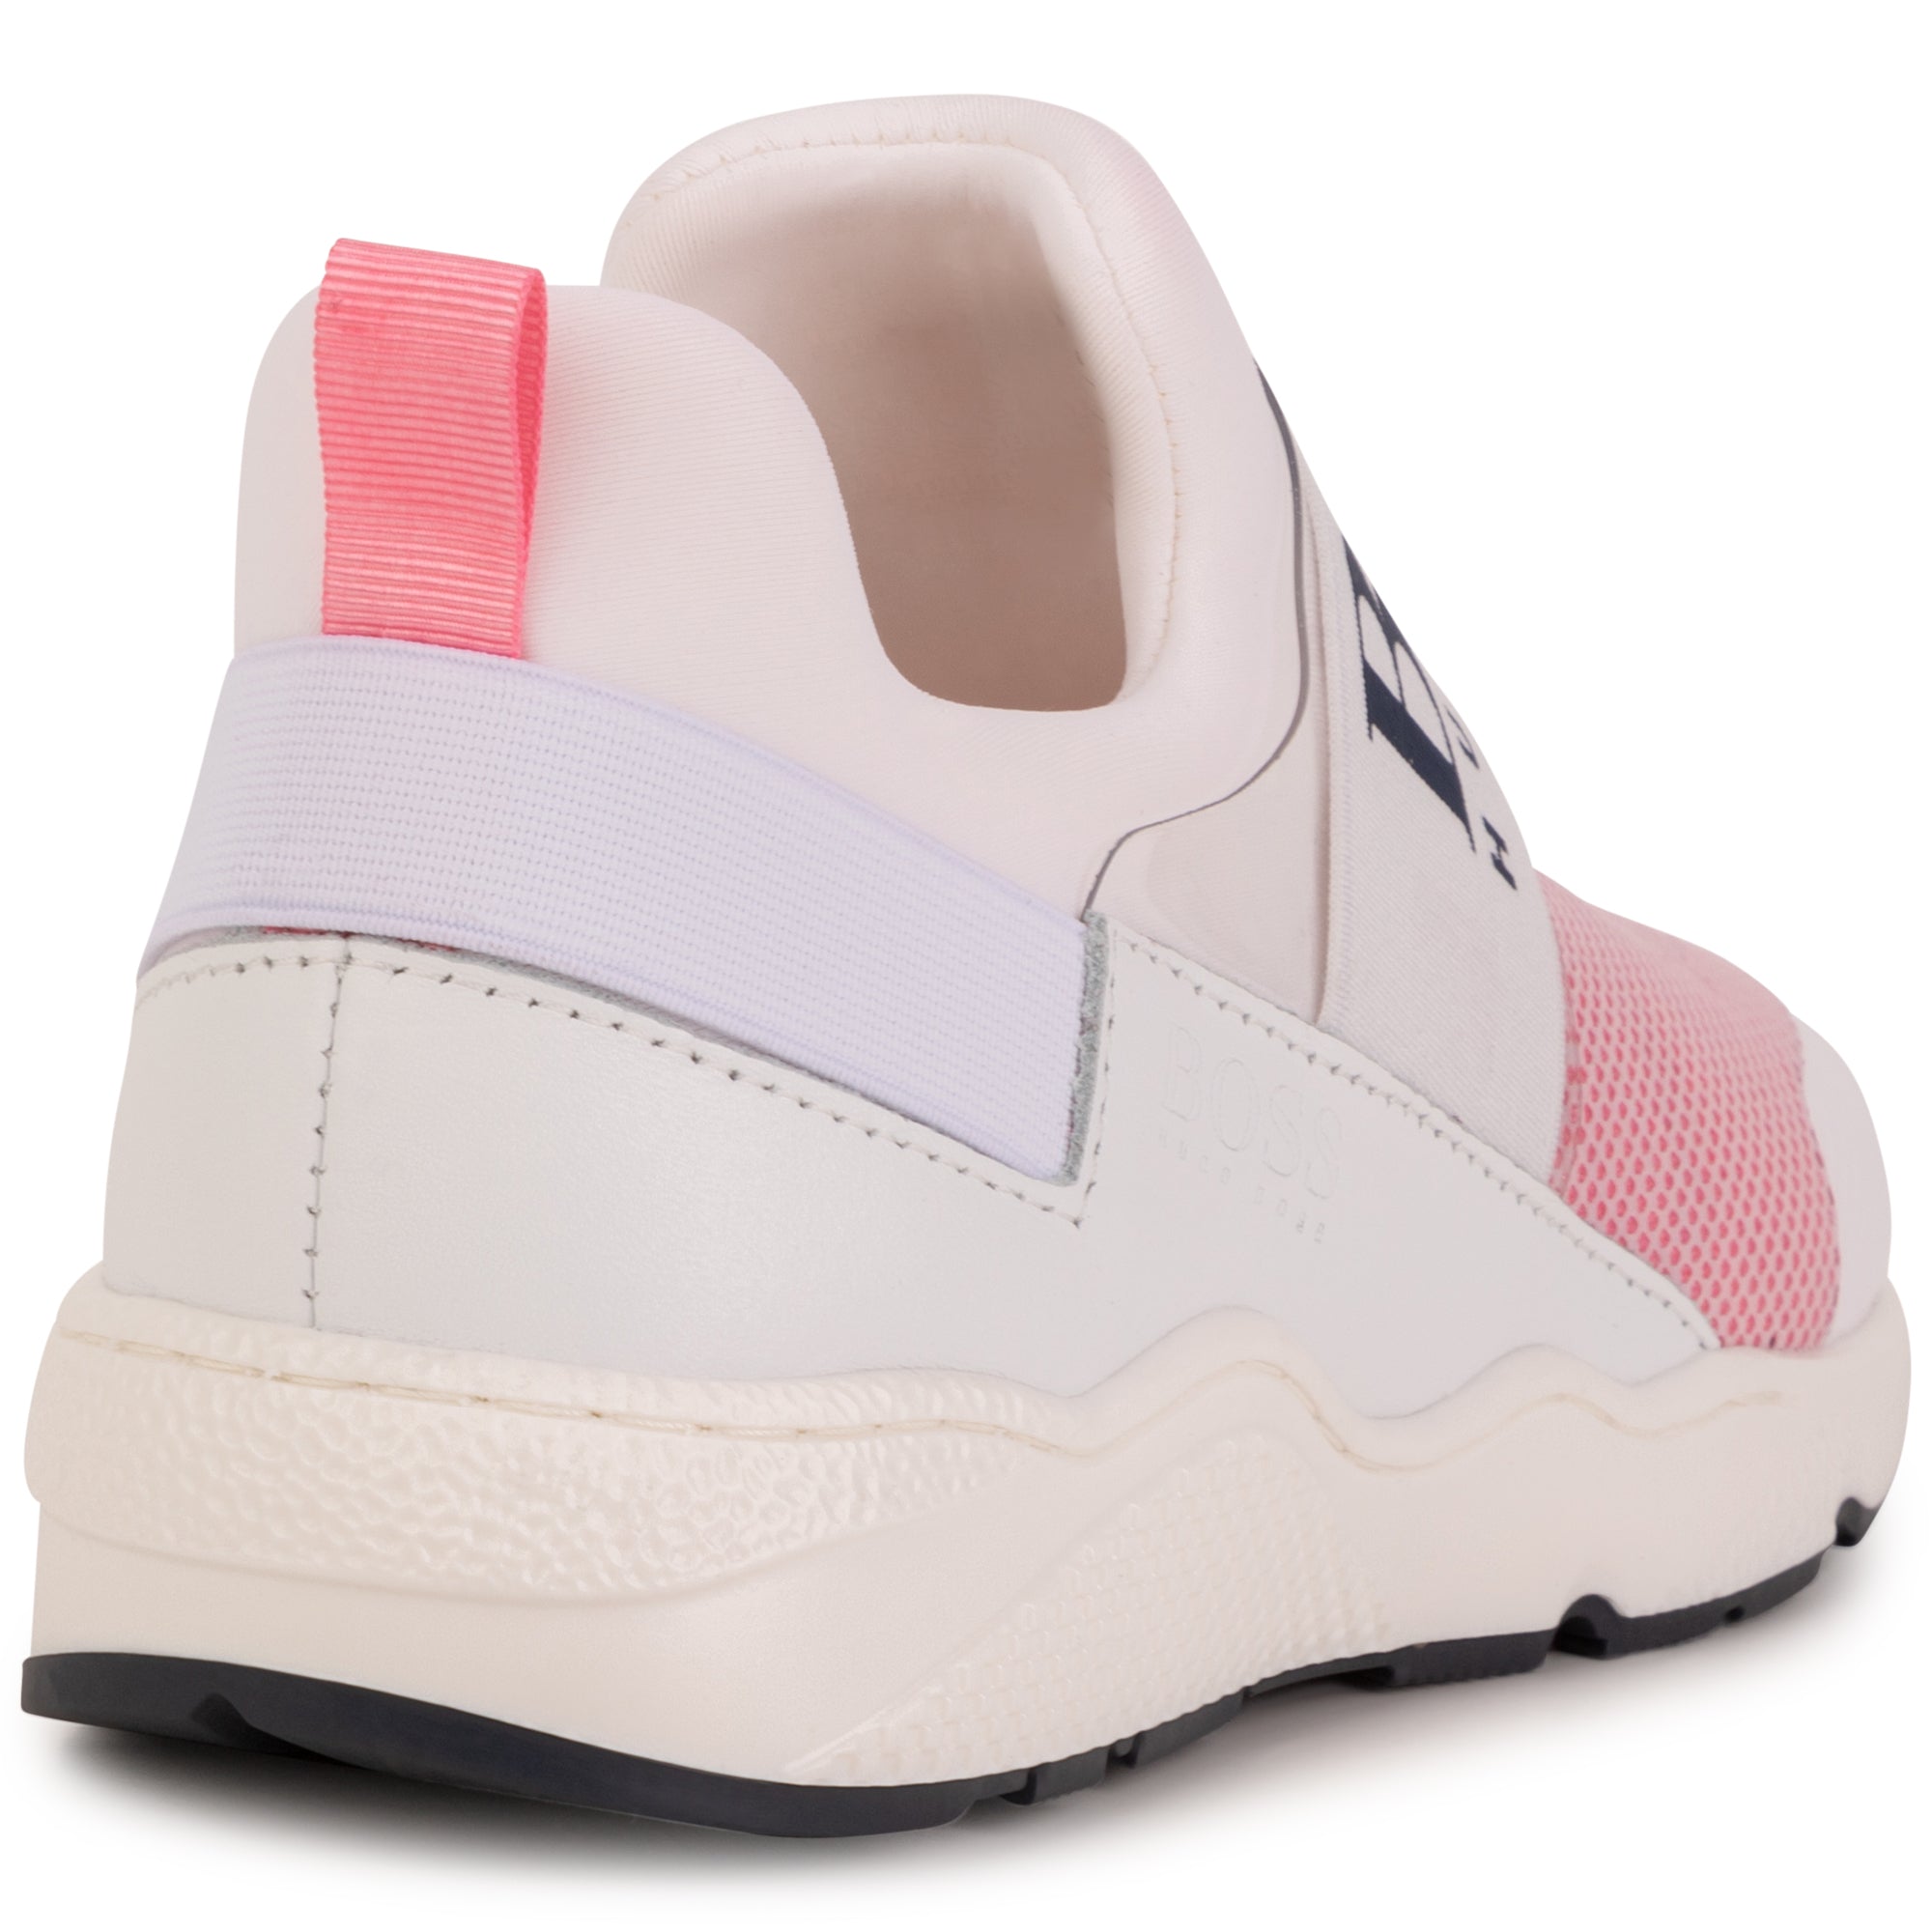 Hugo Boss Pink Sneakers